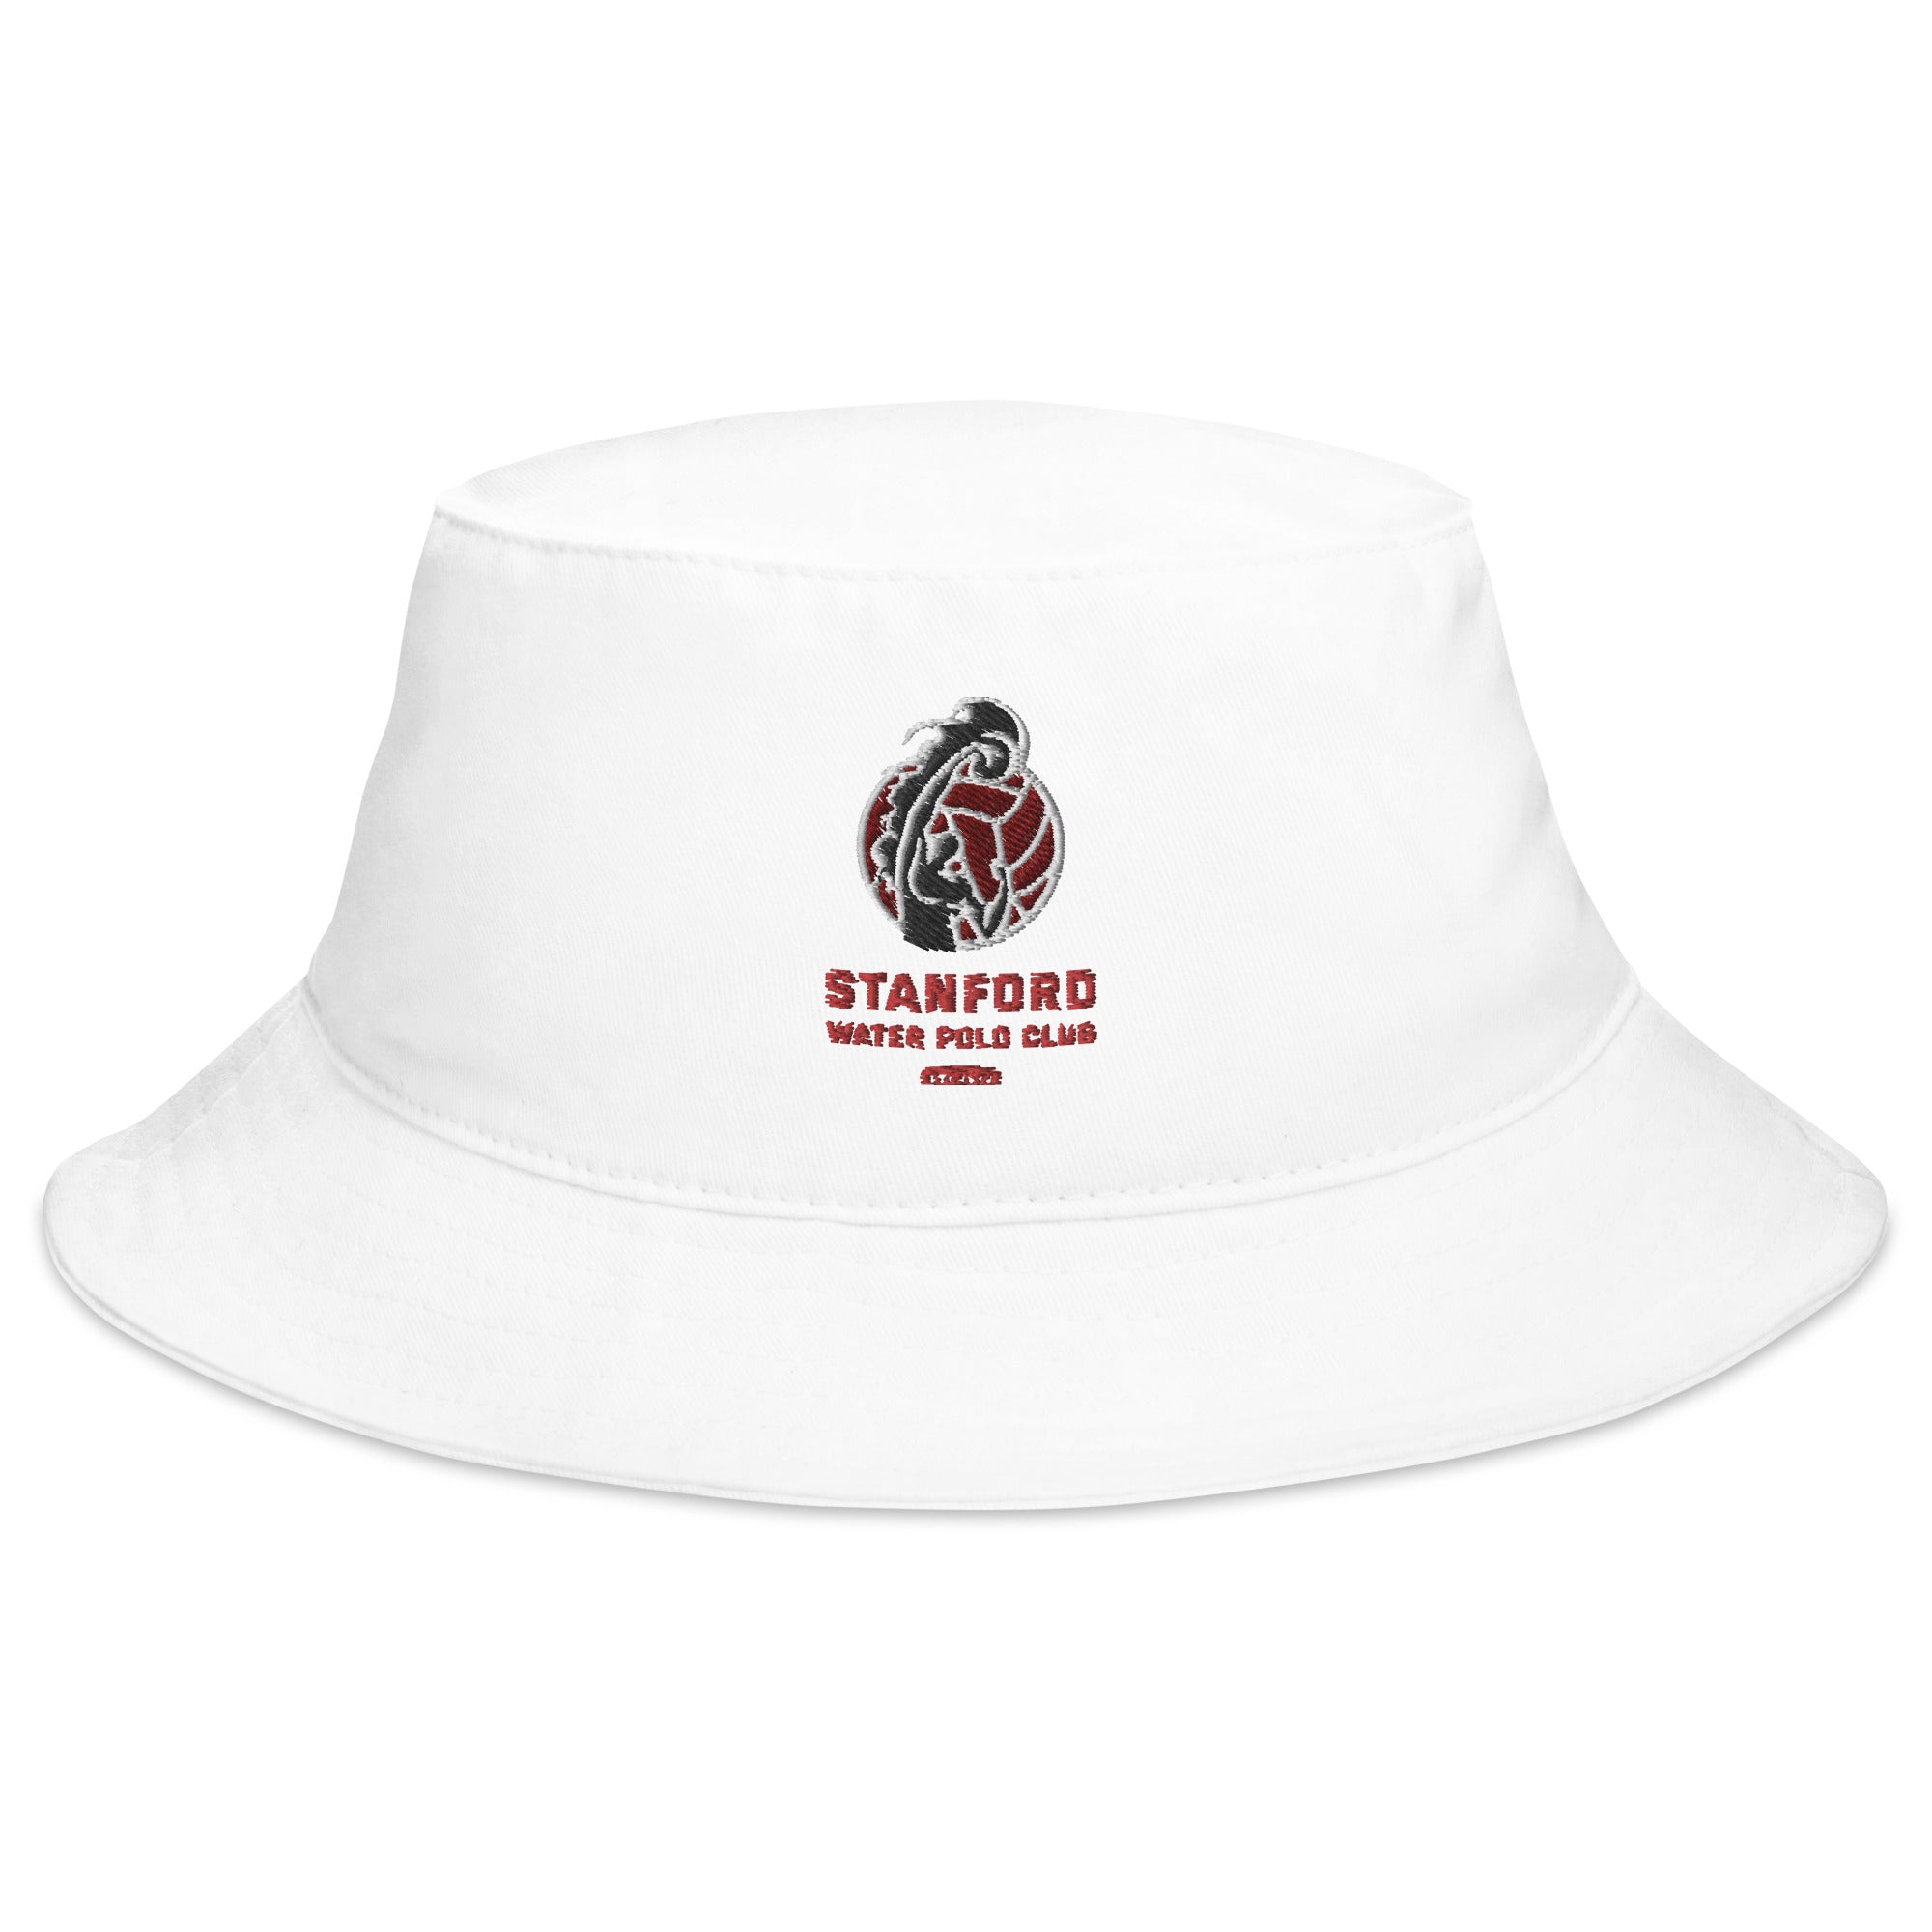 Stanford WPC Team Store - Bucket Hat KAP7 International 